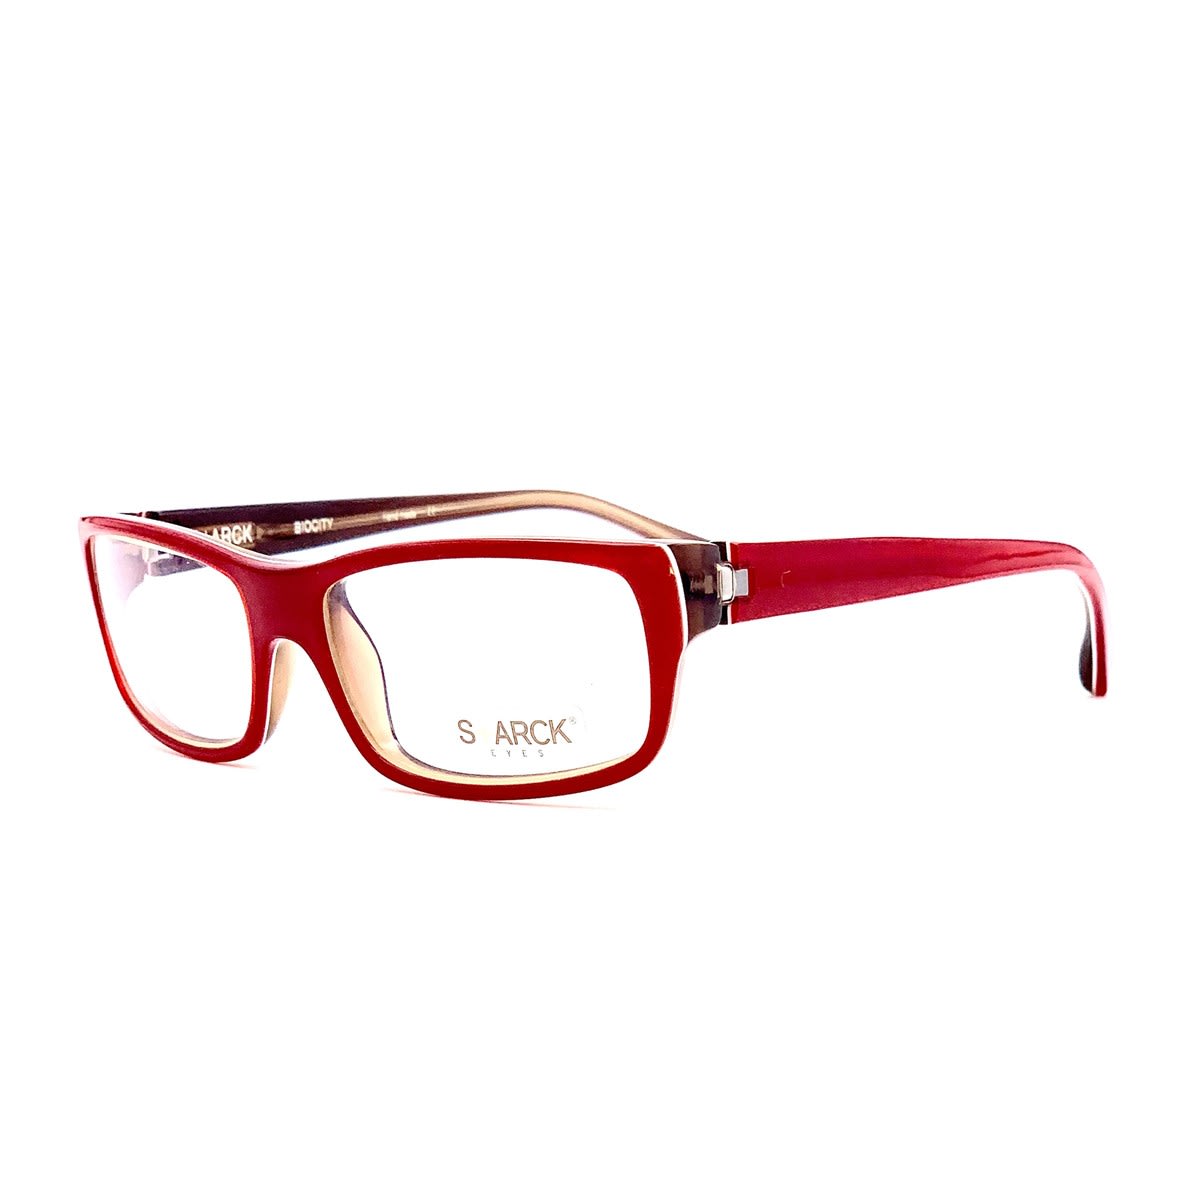 Philippe Starck P0501 Glasses In Rosso